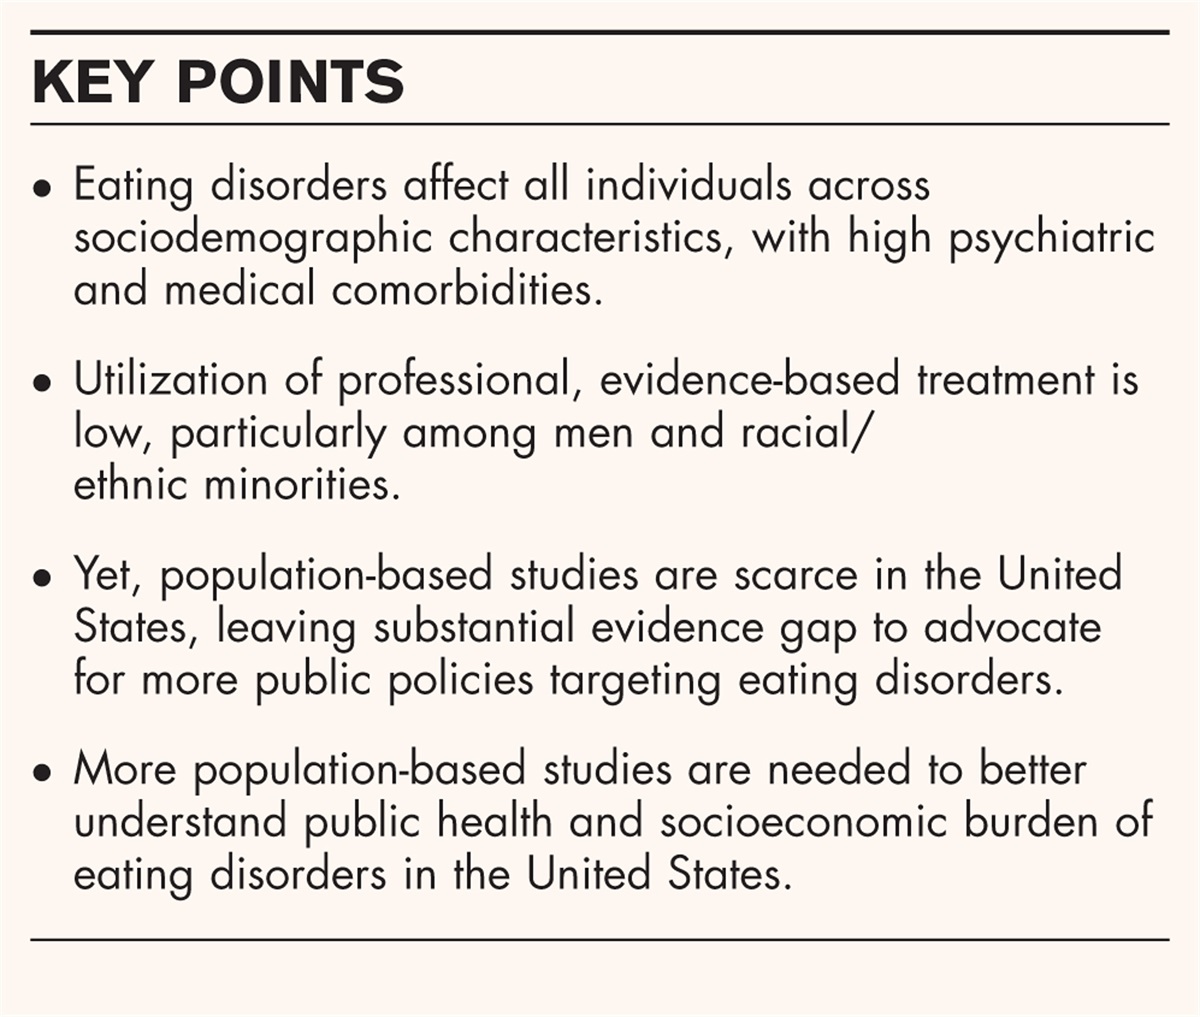 Epidemiology of eating disorders among US adults